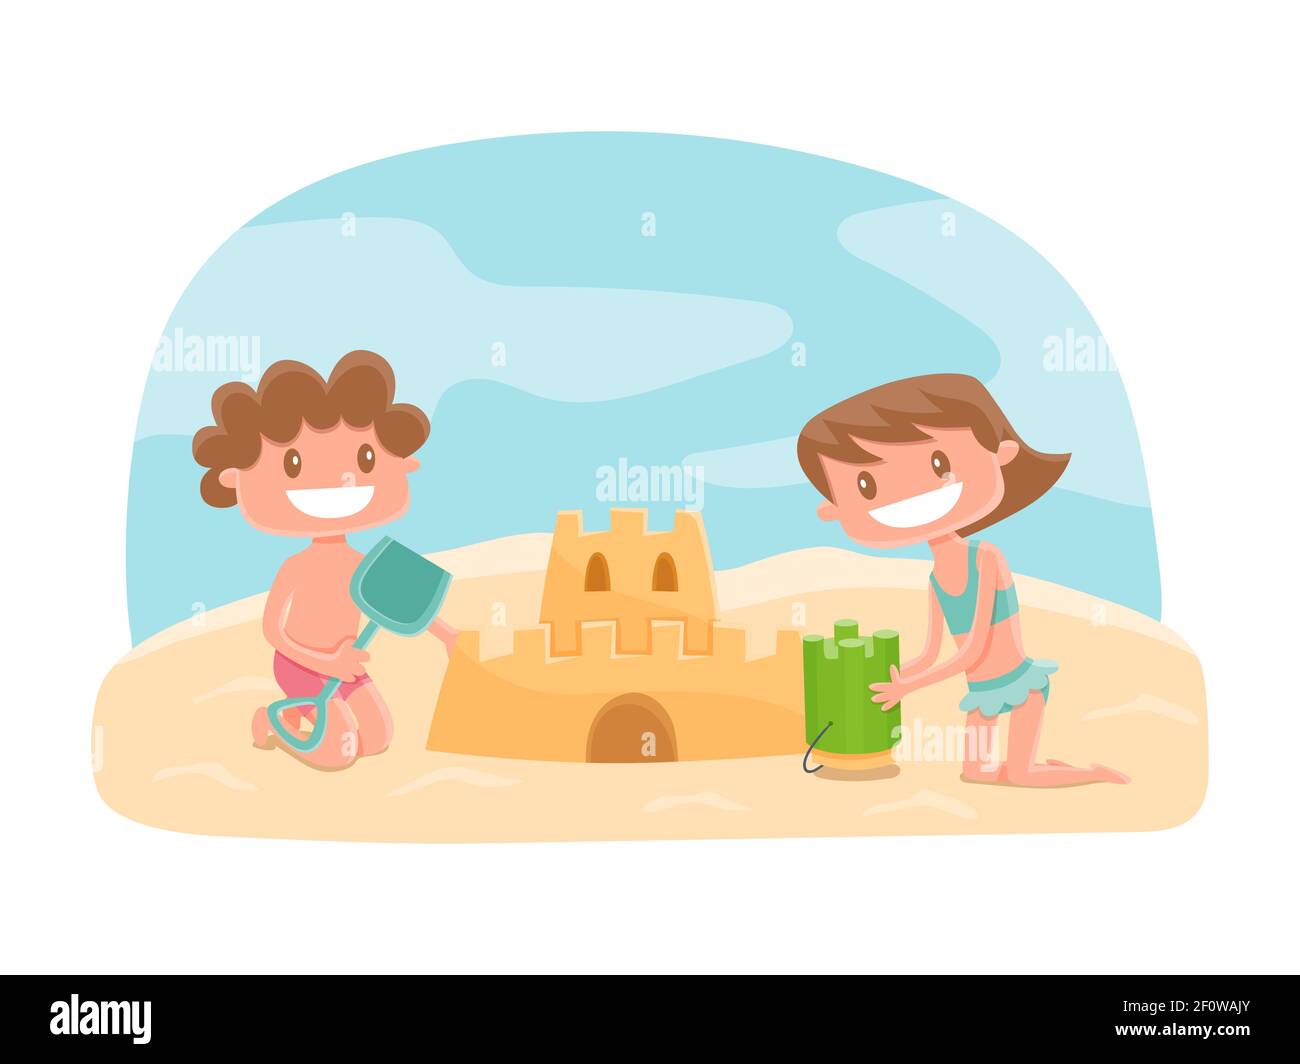 Make a sand castle. Песочный замок. Making a Sandcastle. Make Sandcastles мультяшный. Make a Sandcastle картинка для детей.